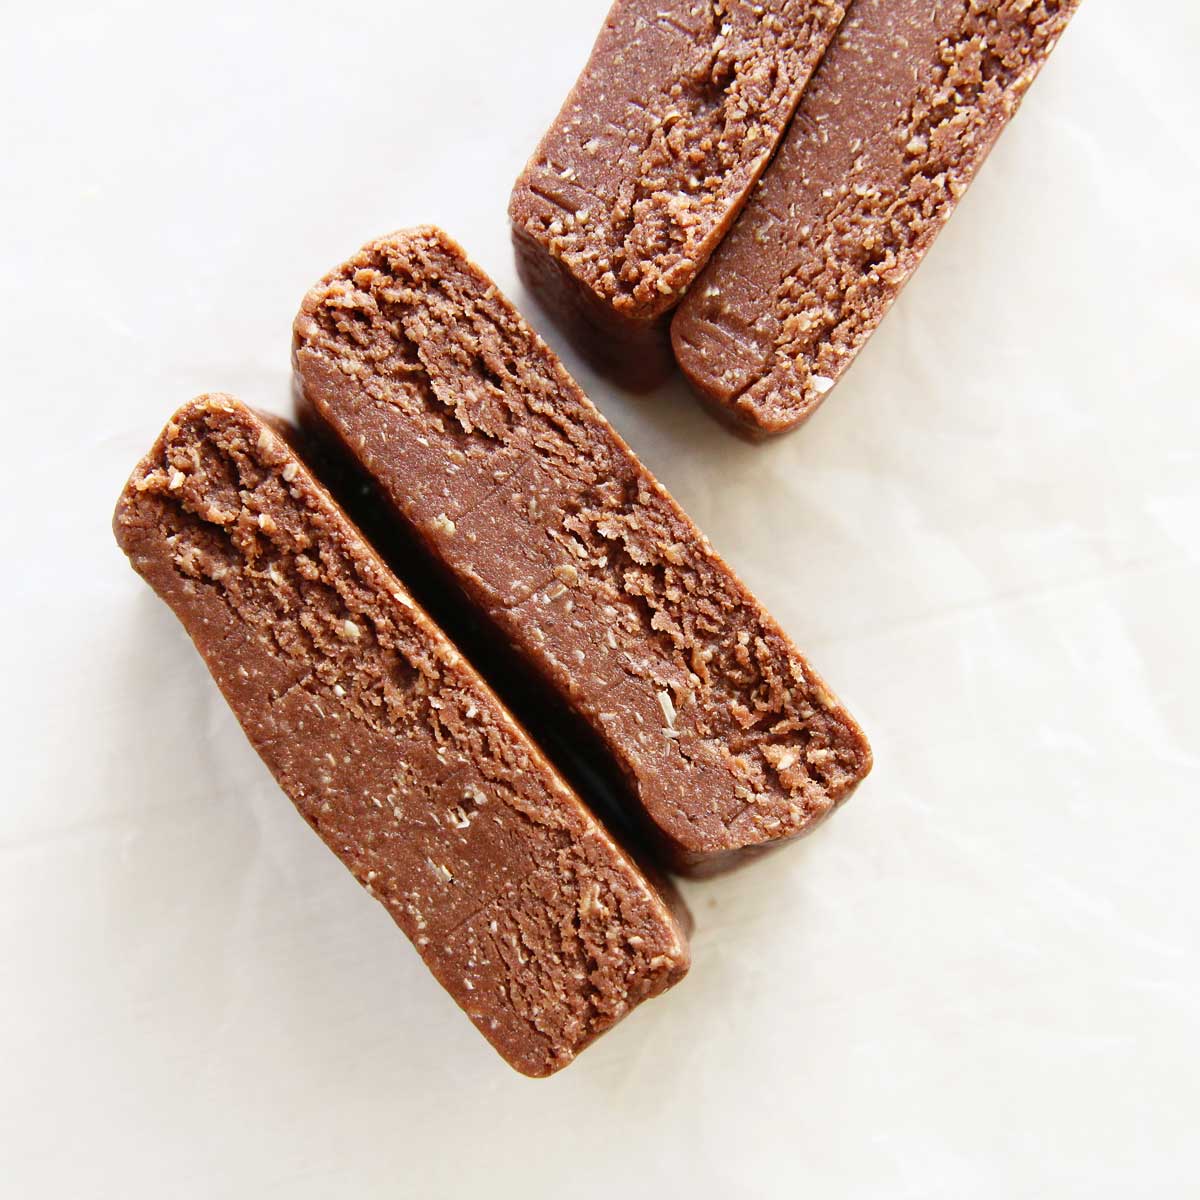 Easy Chocolate Avocado Protein Bars (Healthy, Vegan & Low Carb Recipe!) - Chocolate Avocado Protein Bars